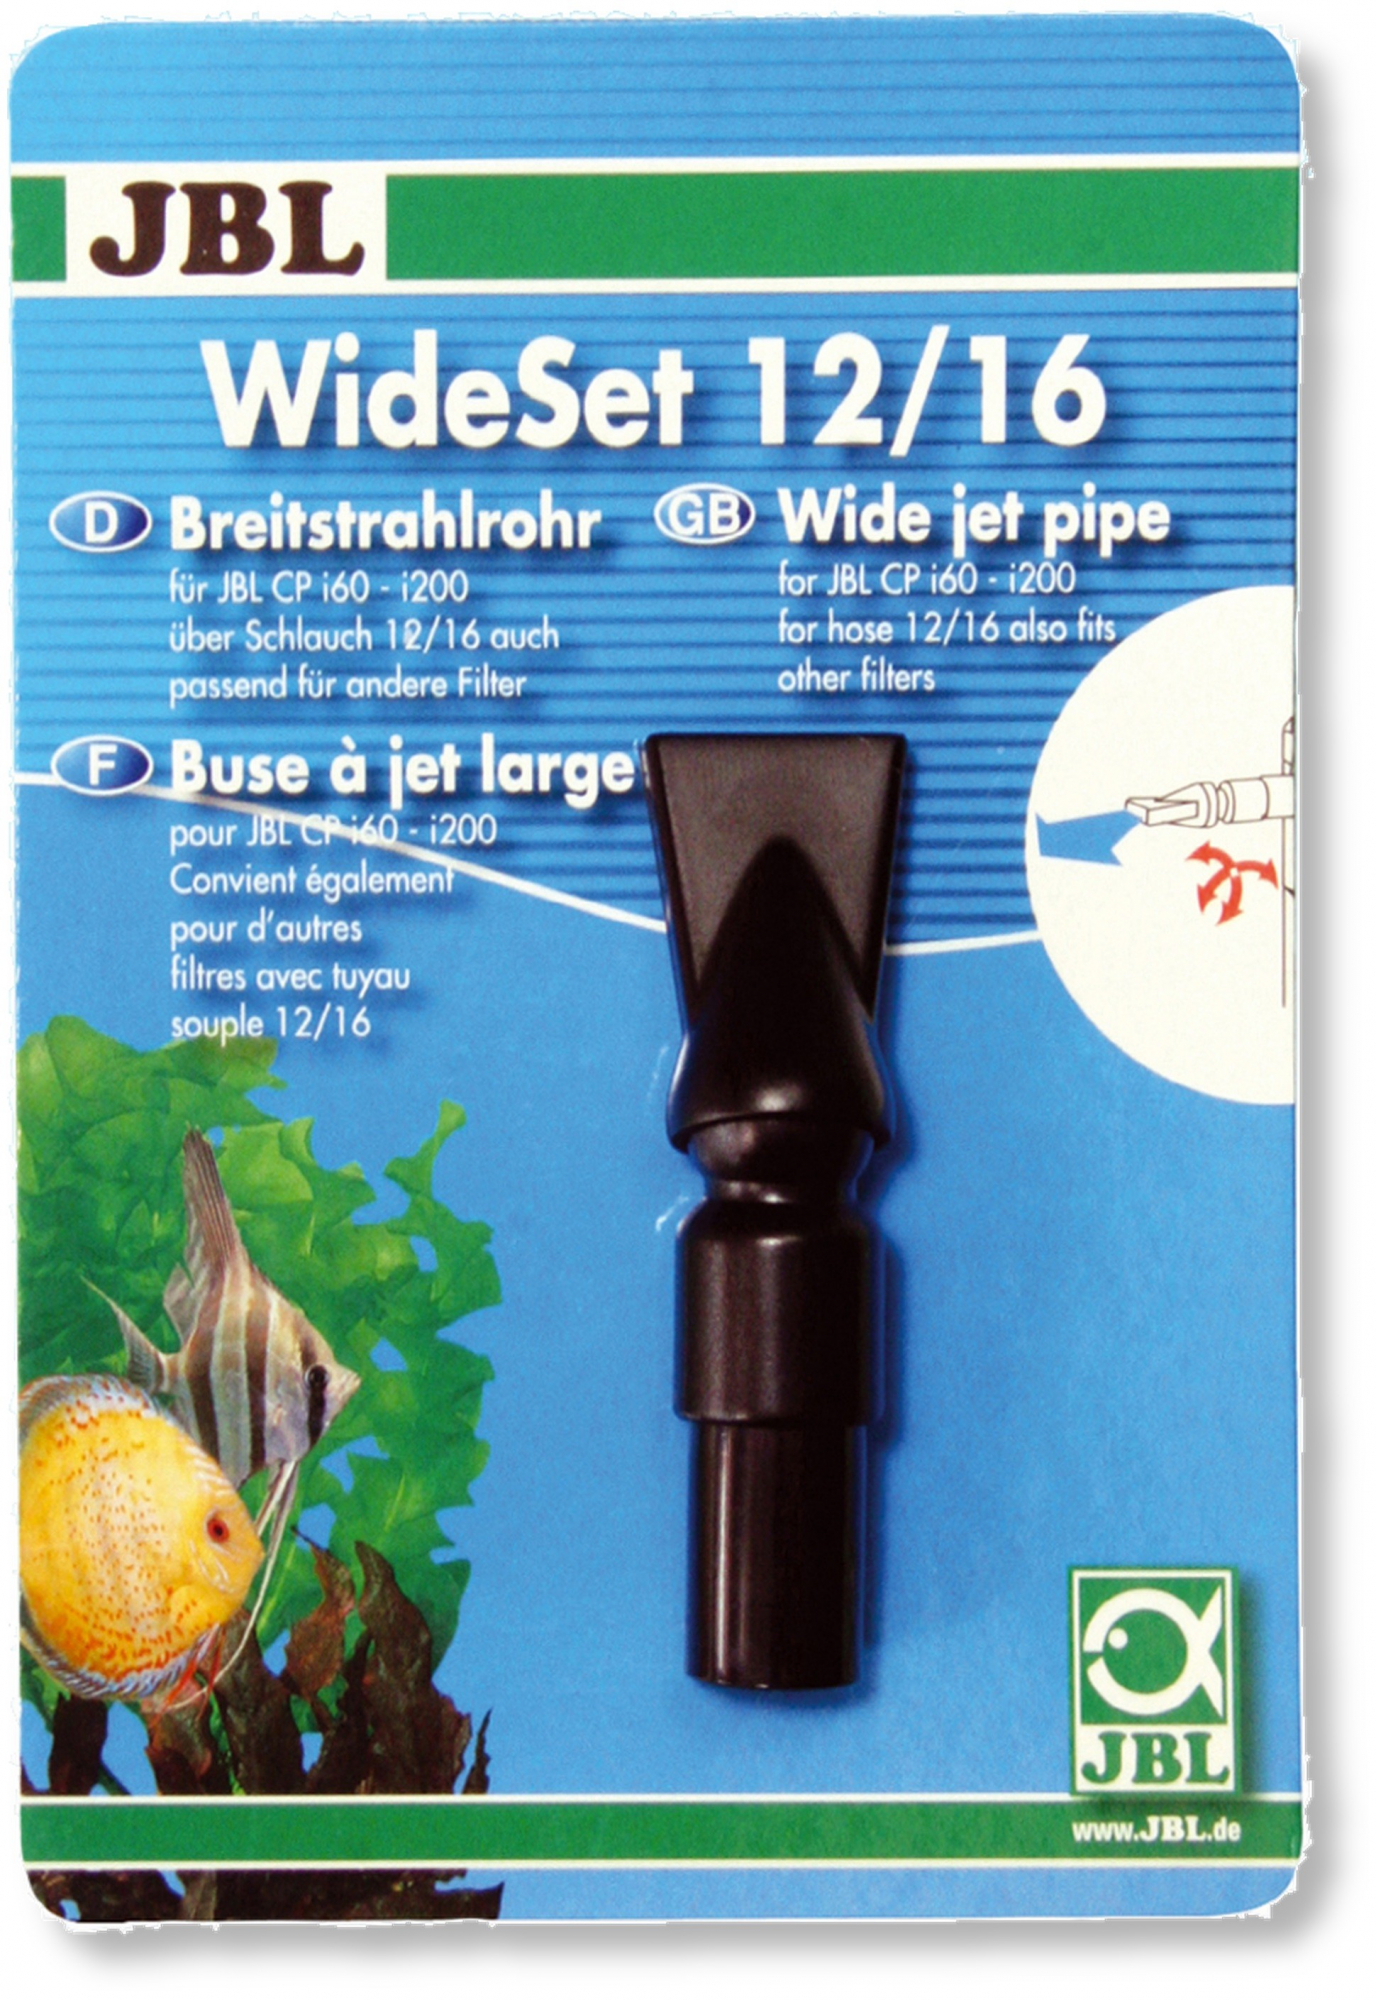 JBL WideSet 12/16, Tubo de chorro ancho 12/16mm